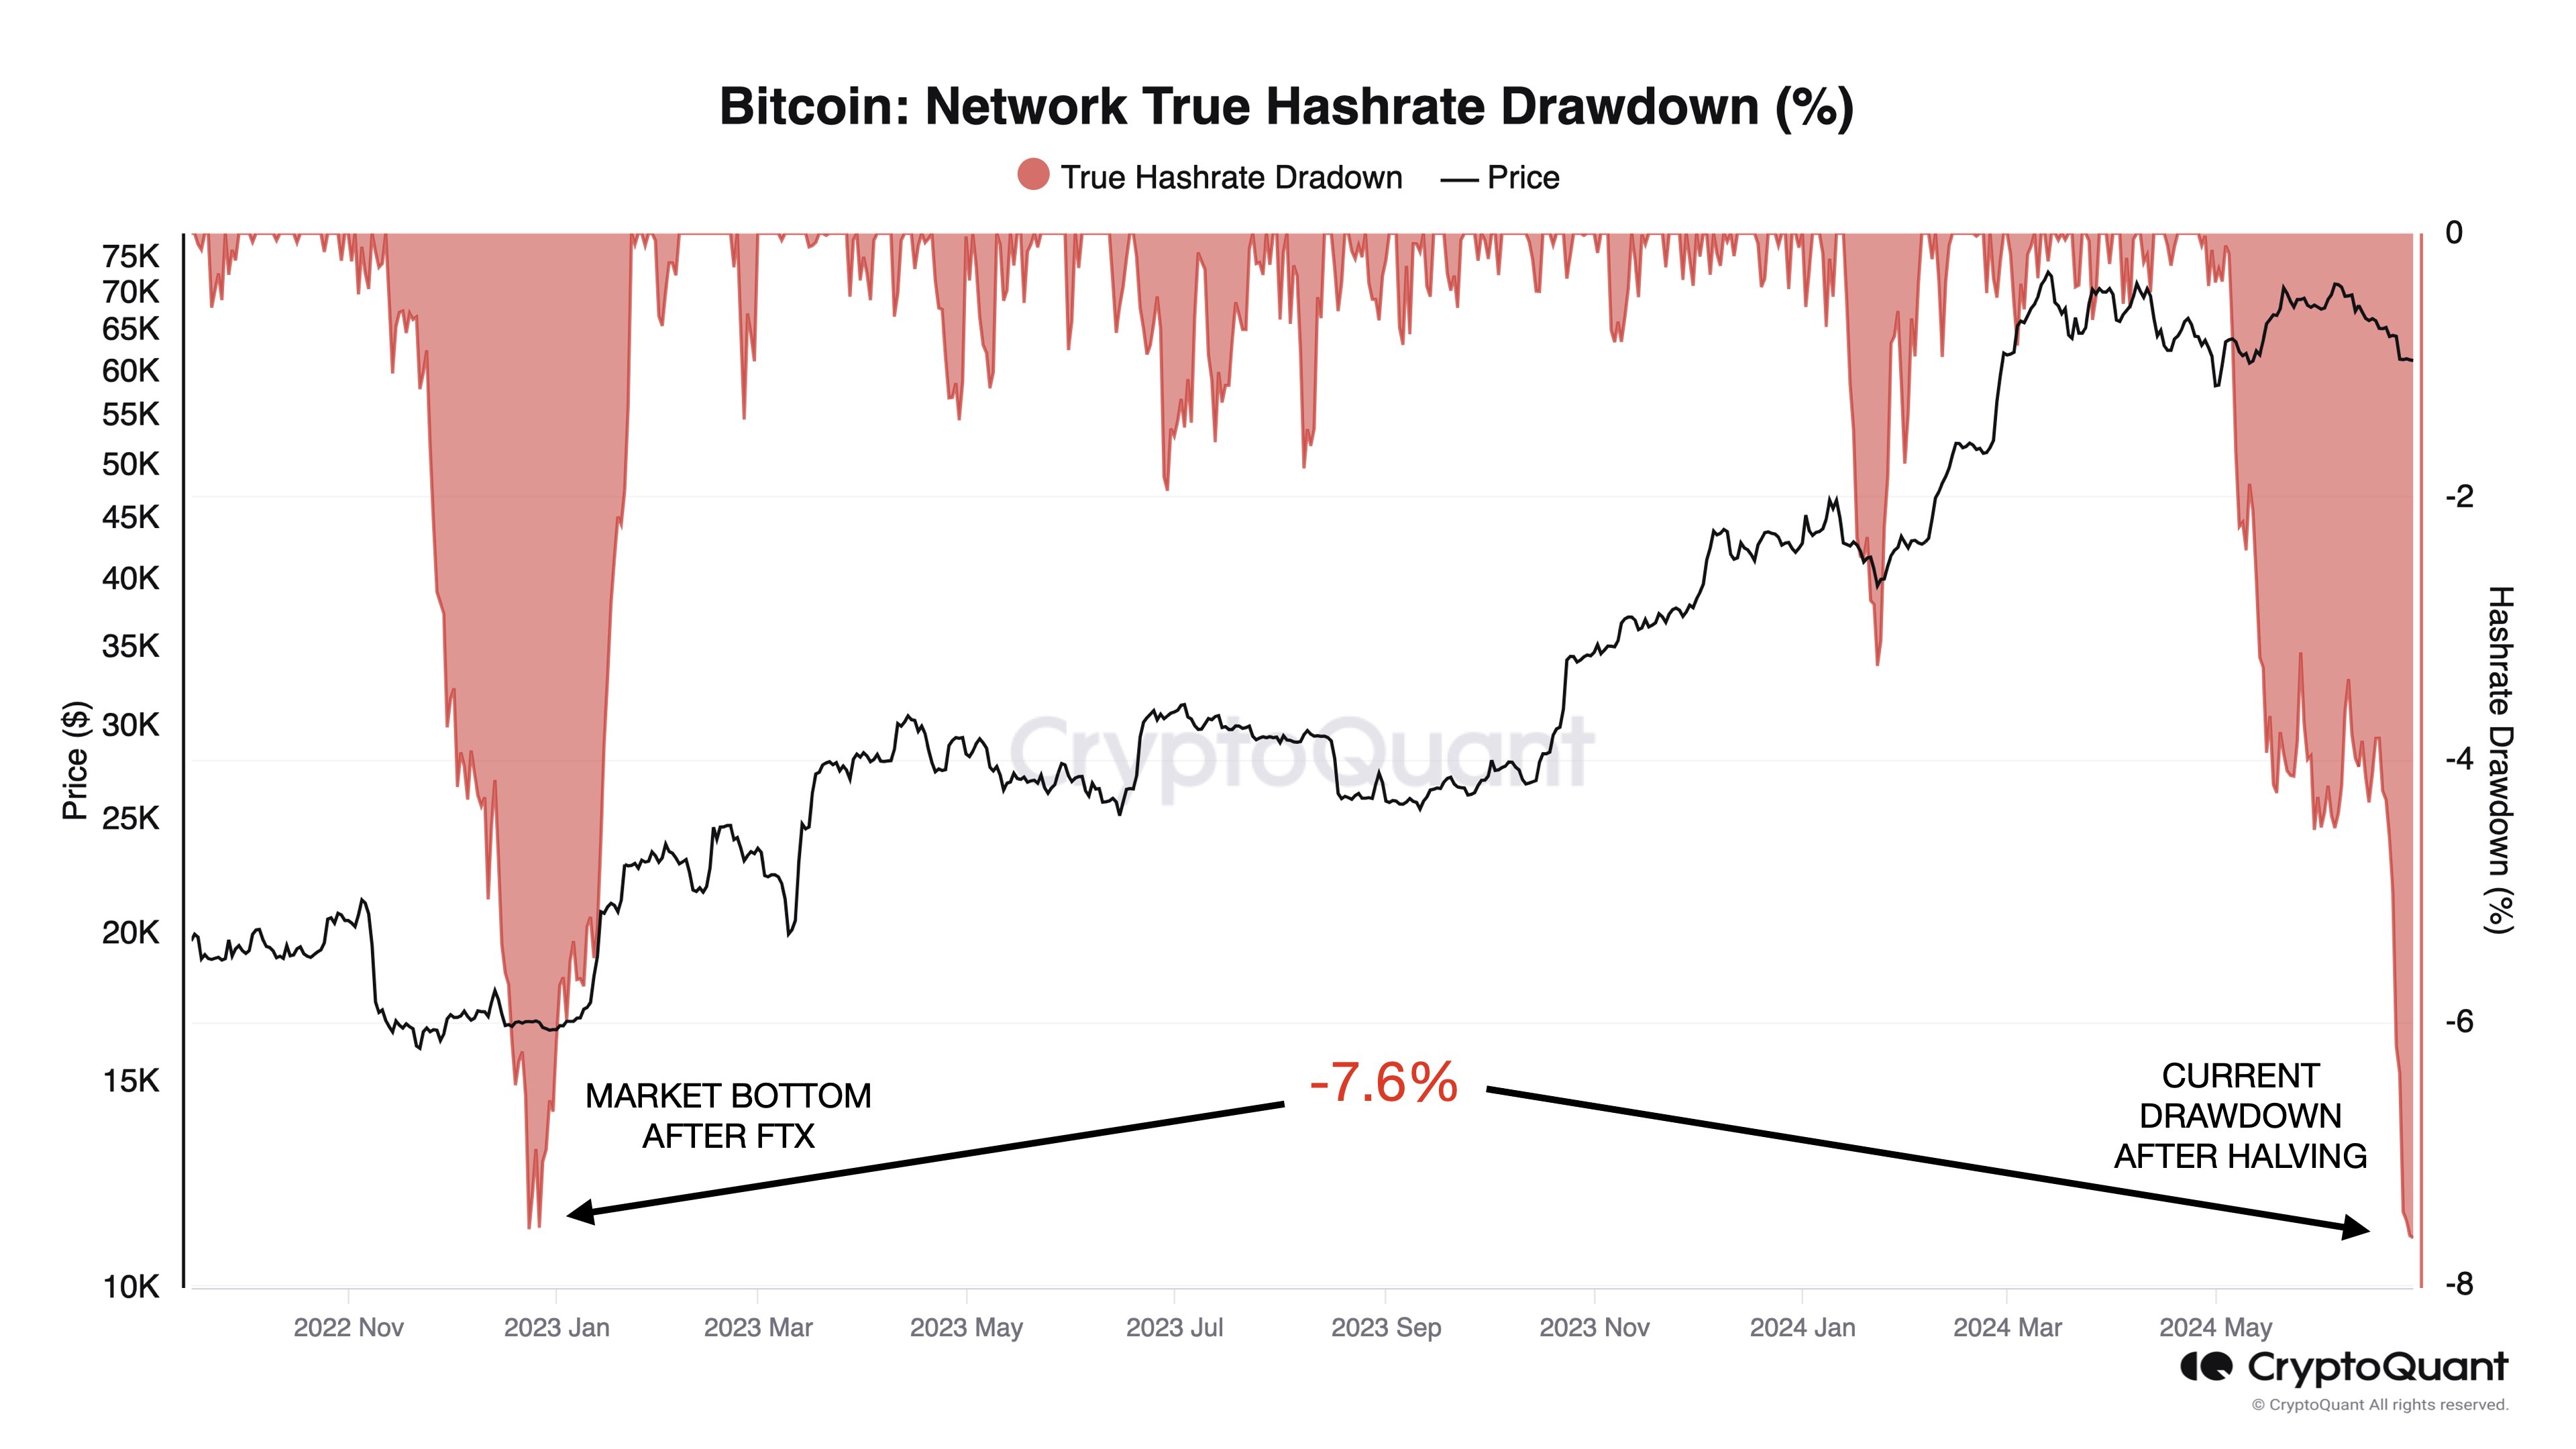 Bitcoin network hashrate drawdown